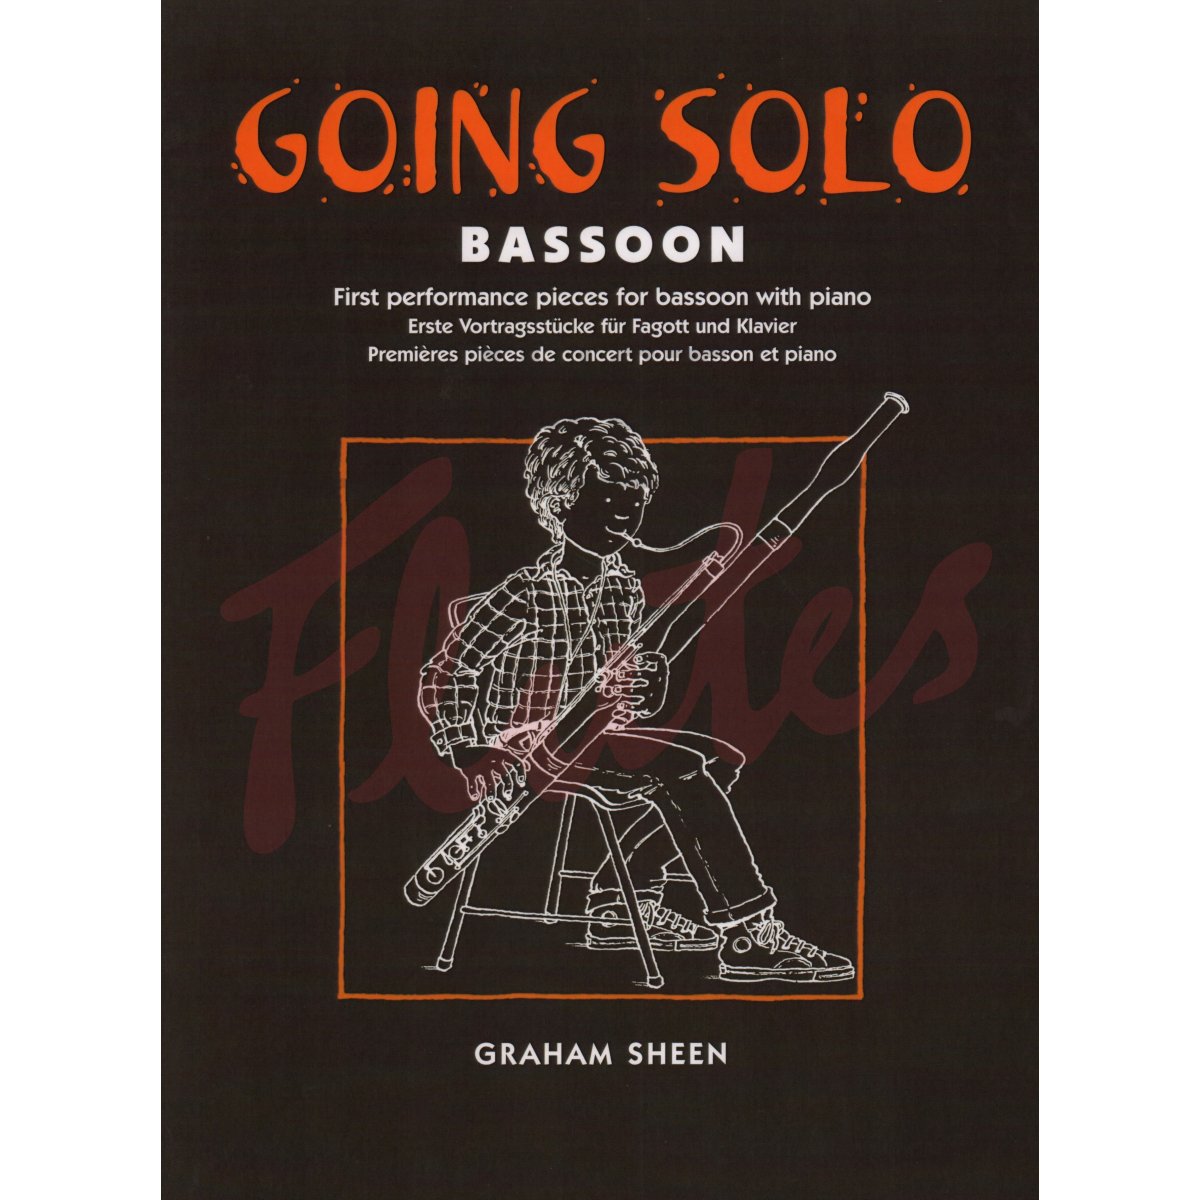 Going Solo [Bassoon]